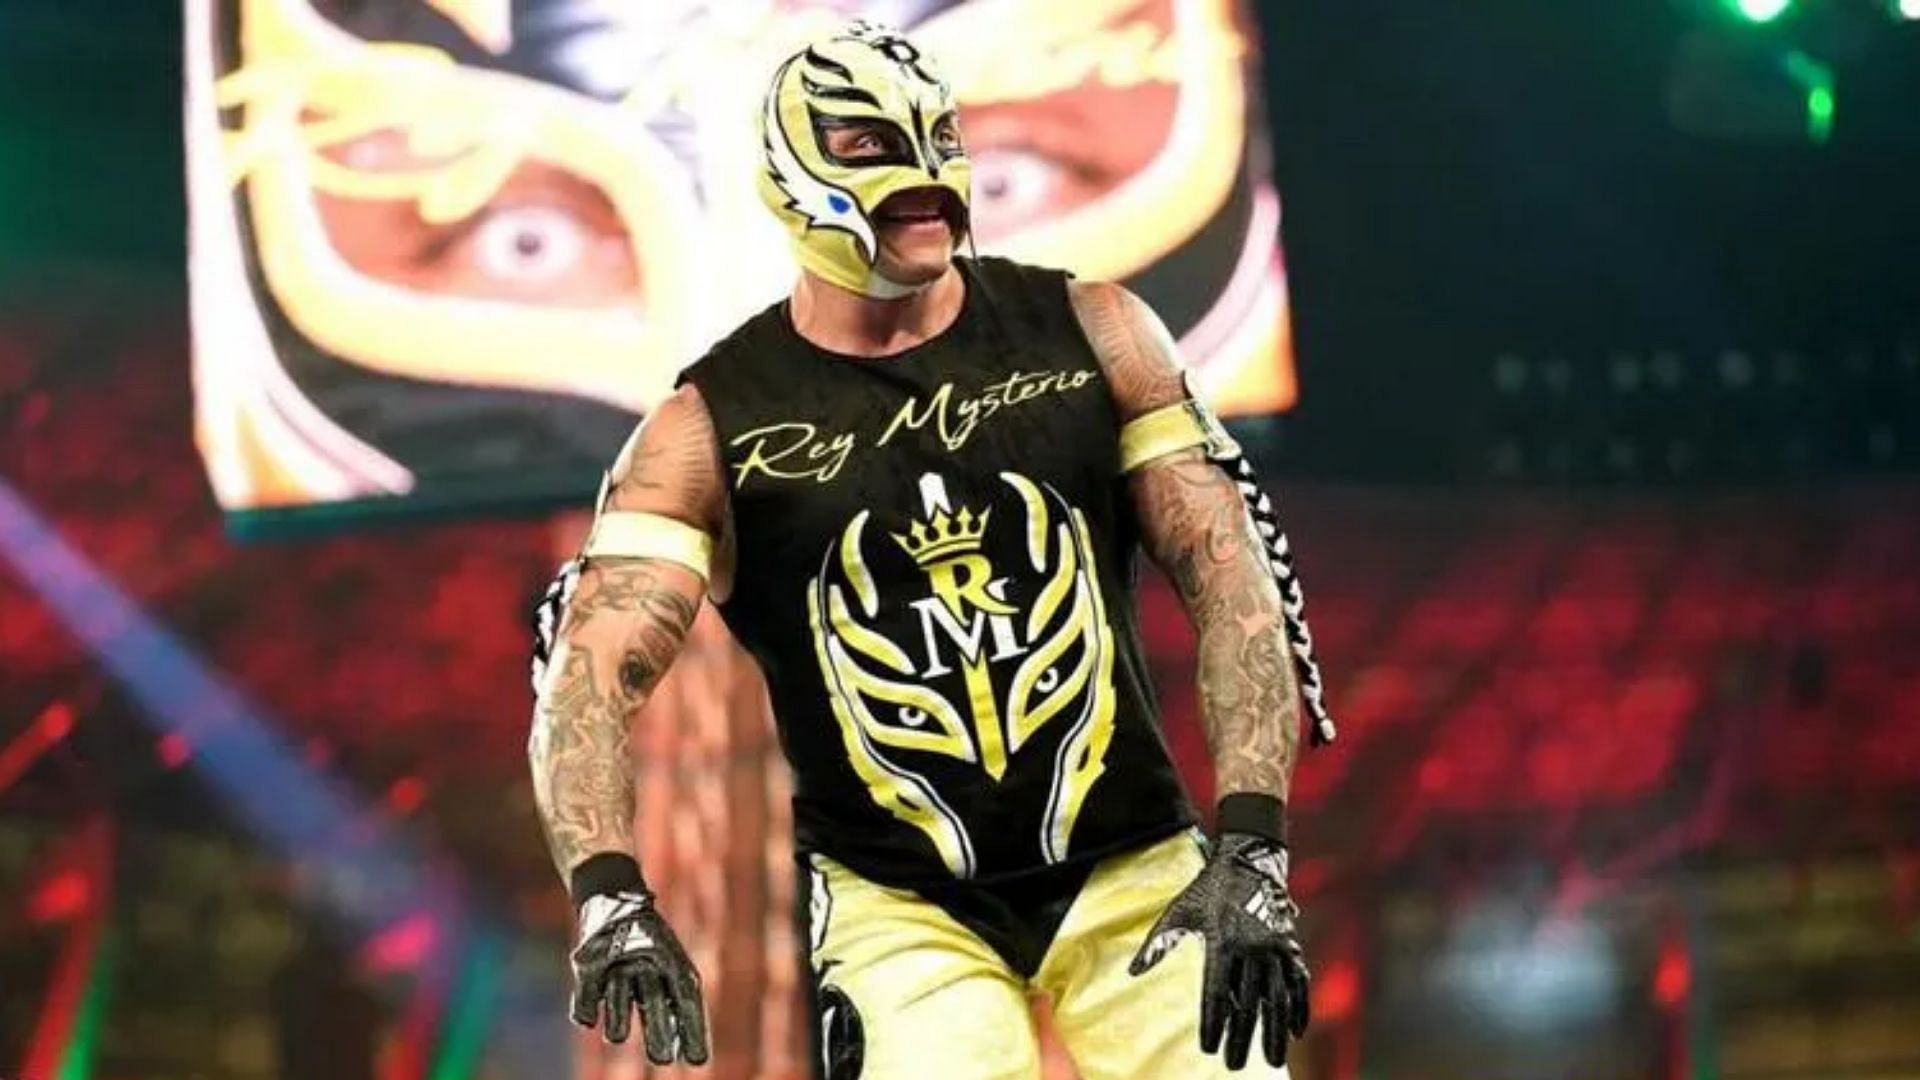 WWE Hall of Famer Rey Mysterio.